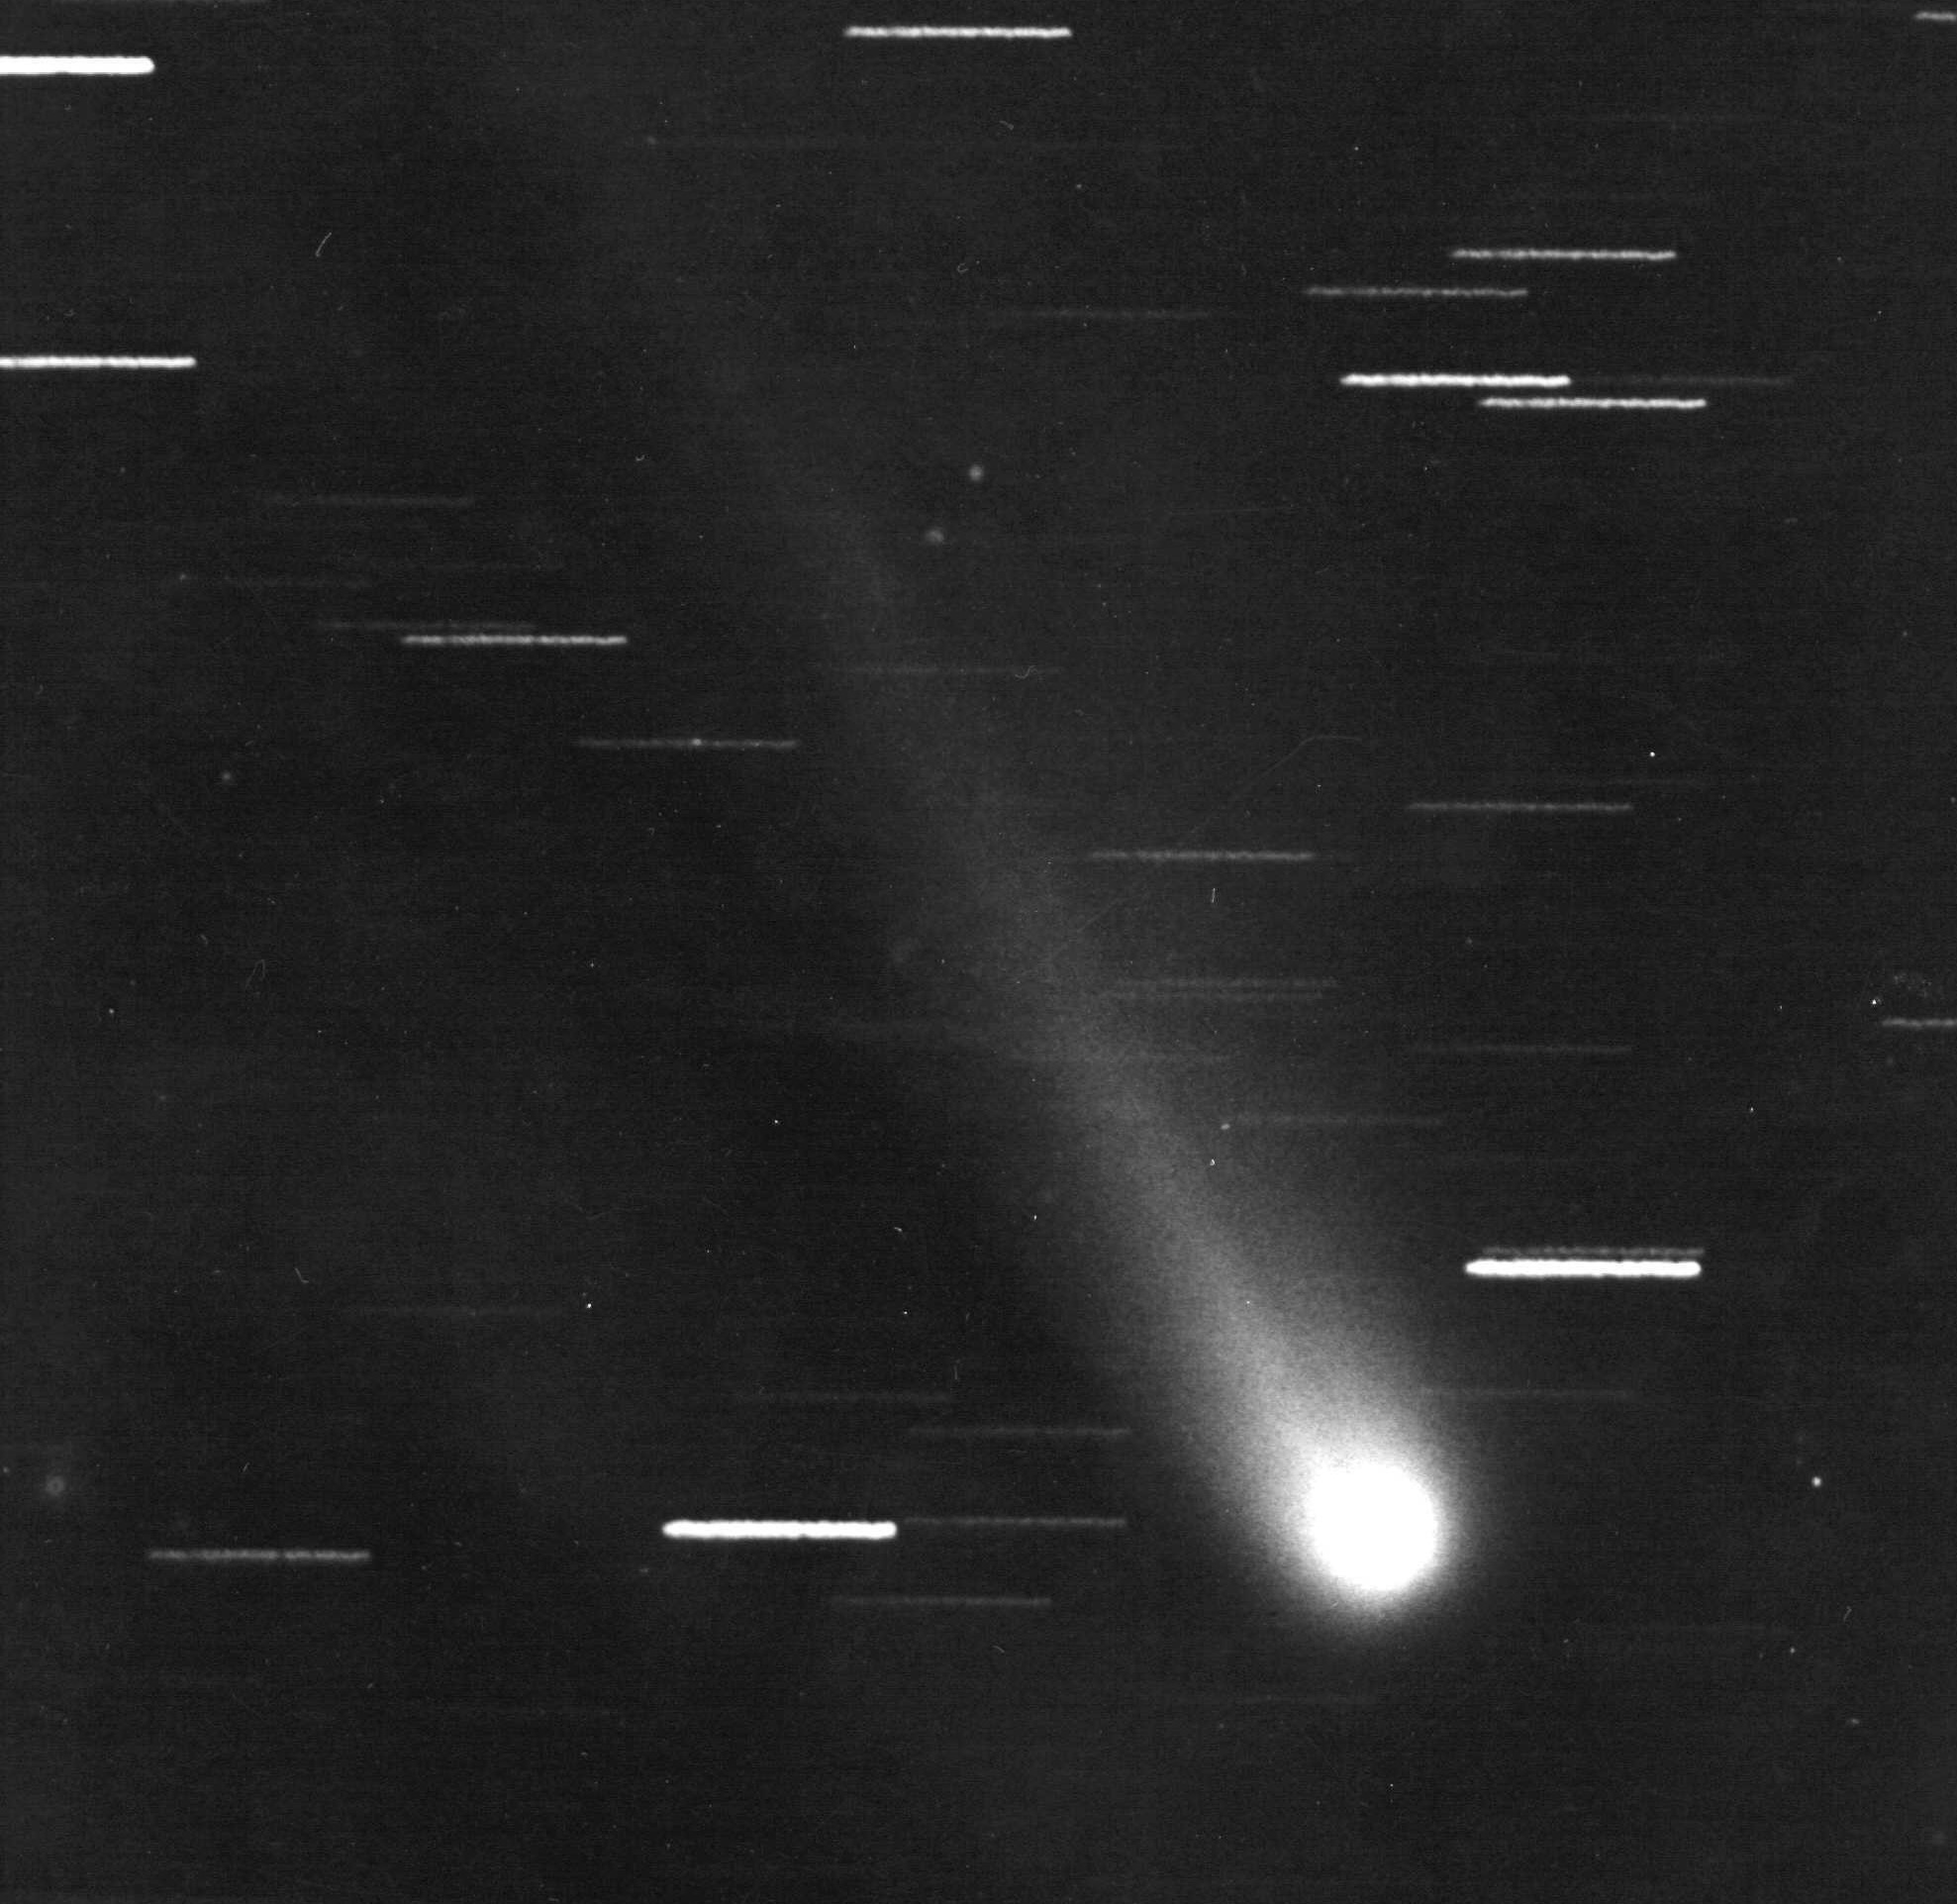 Kométa C/1957 P1 Mrkos. Zdroj: archív AsÚ SAV